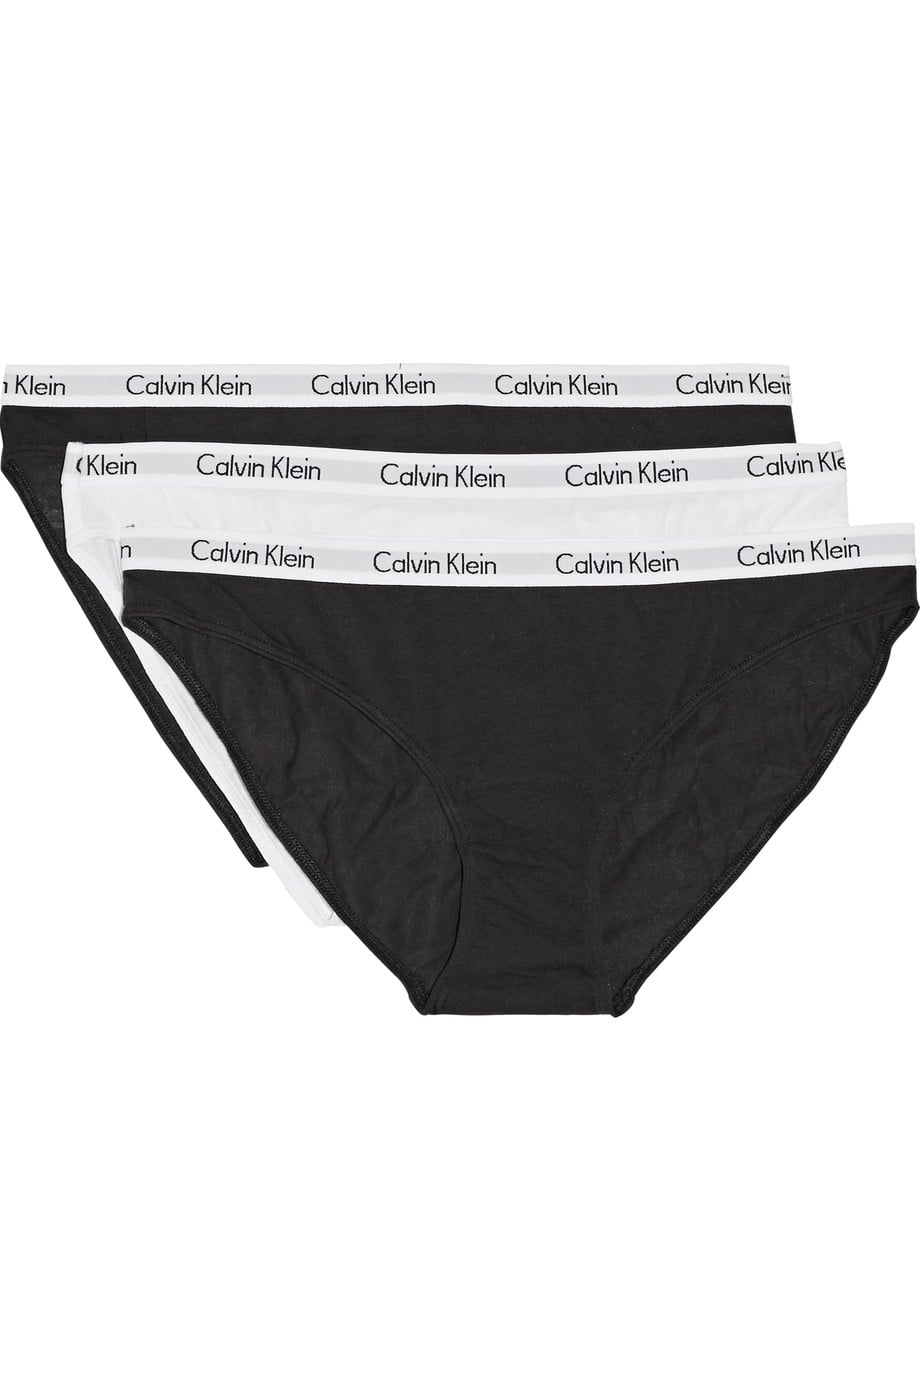 Calvin Klein Underwear Set Of Three Carousel Stretch-Cotton Jersey Briefs |  Carrie Bradshaw Gifts So Stylish and Great, They Deserve Their Own Column |  POPSUGAR Fashion Photo 25